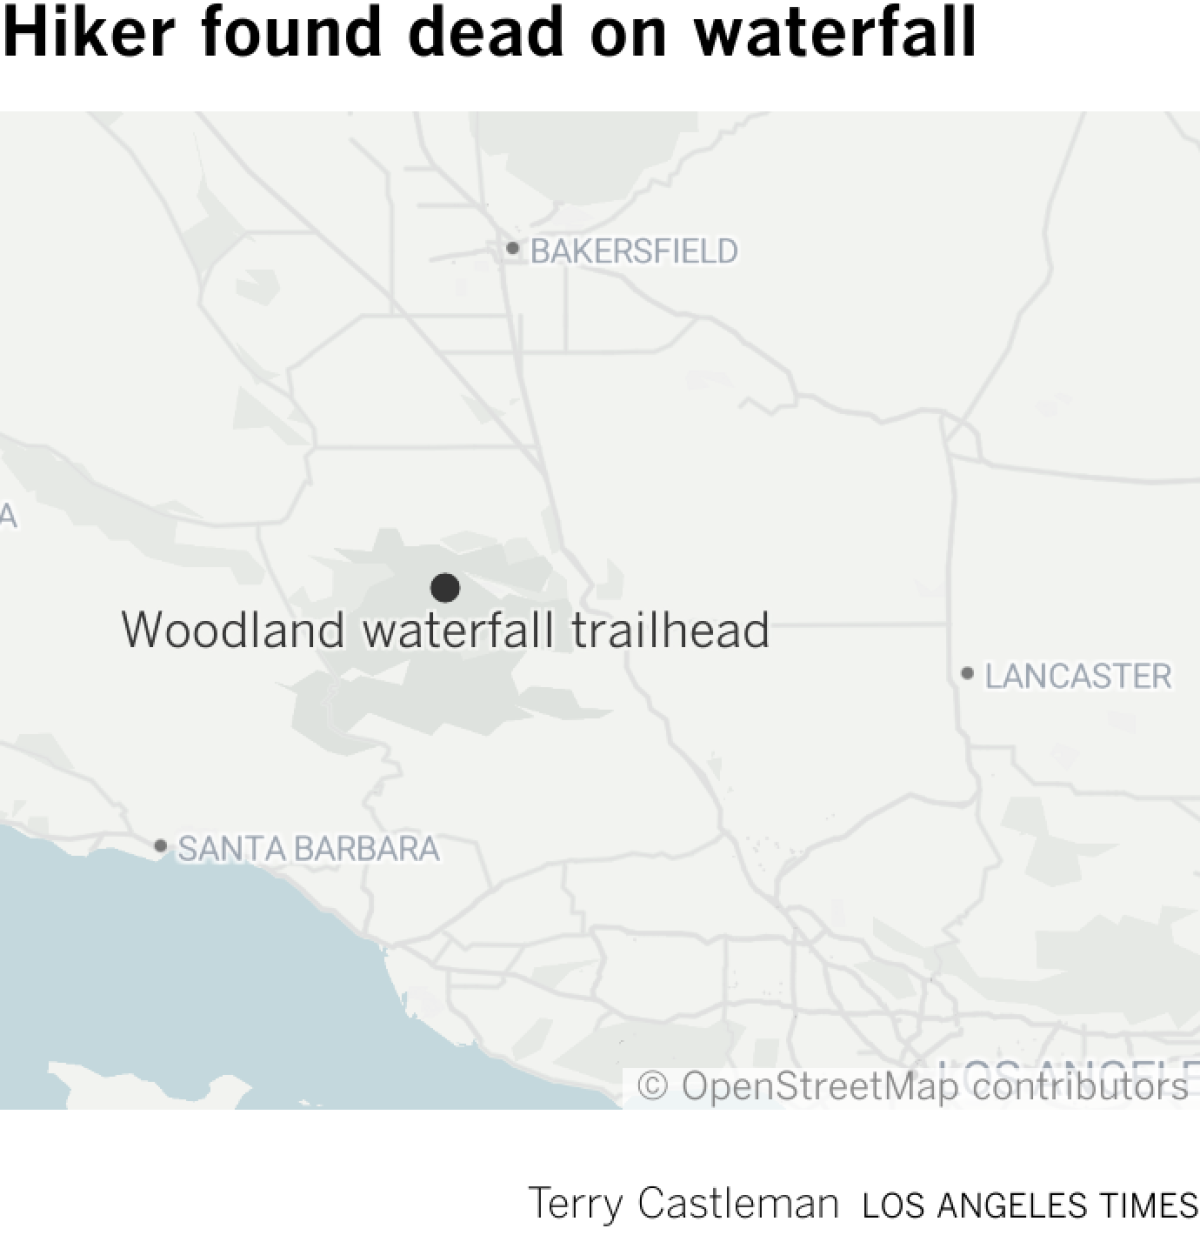 Hiker found dead on waterfall